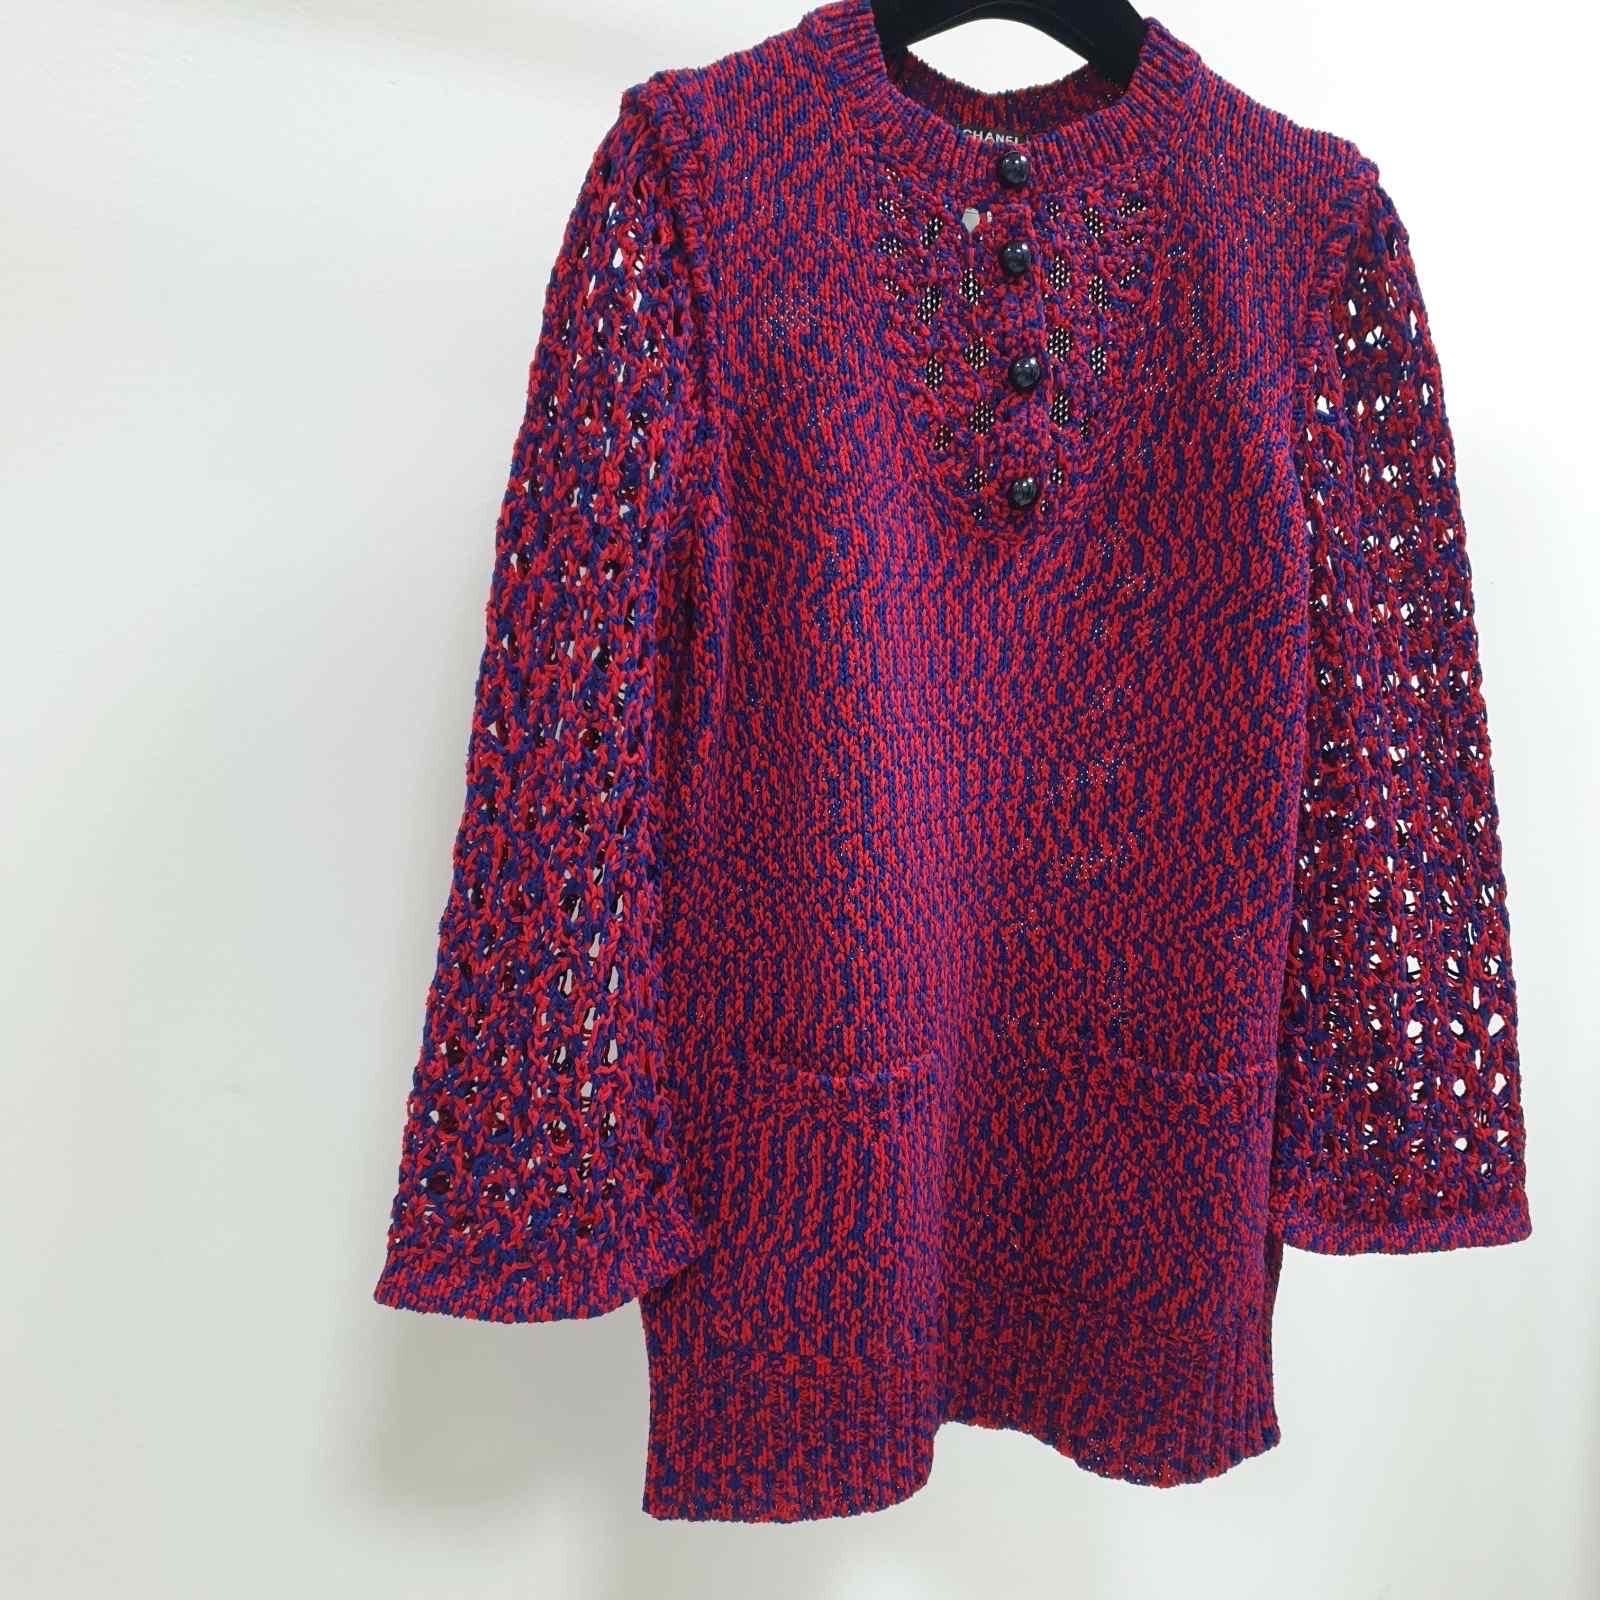 Chanel Keira Knightley Dress Sweater Tops  2